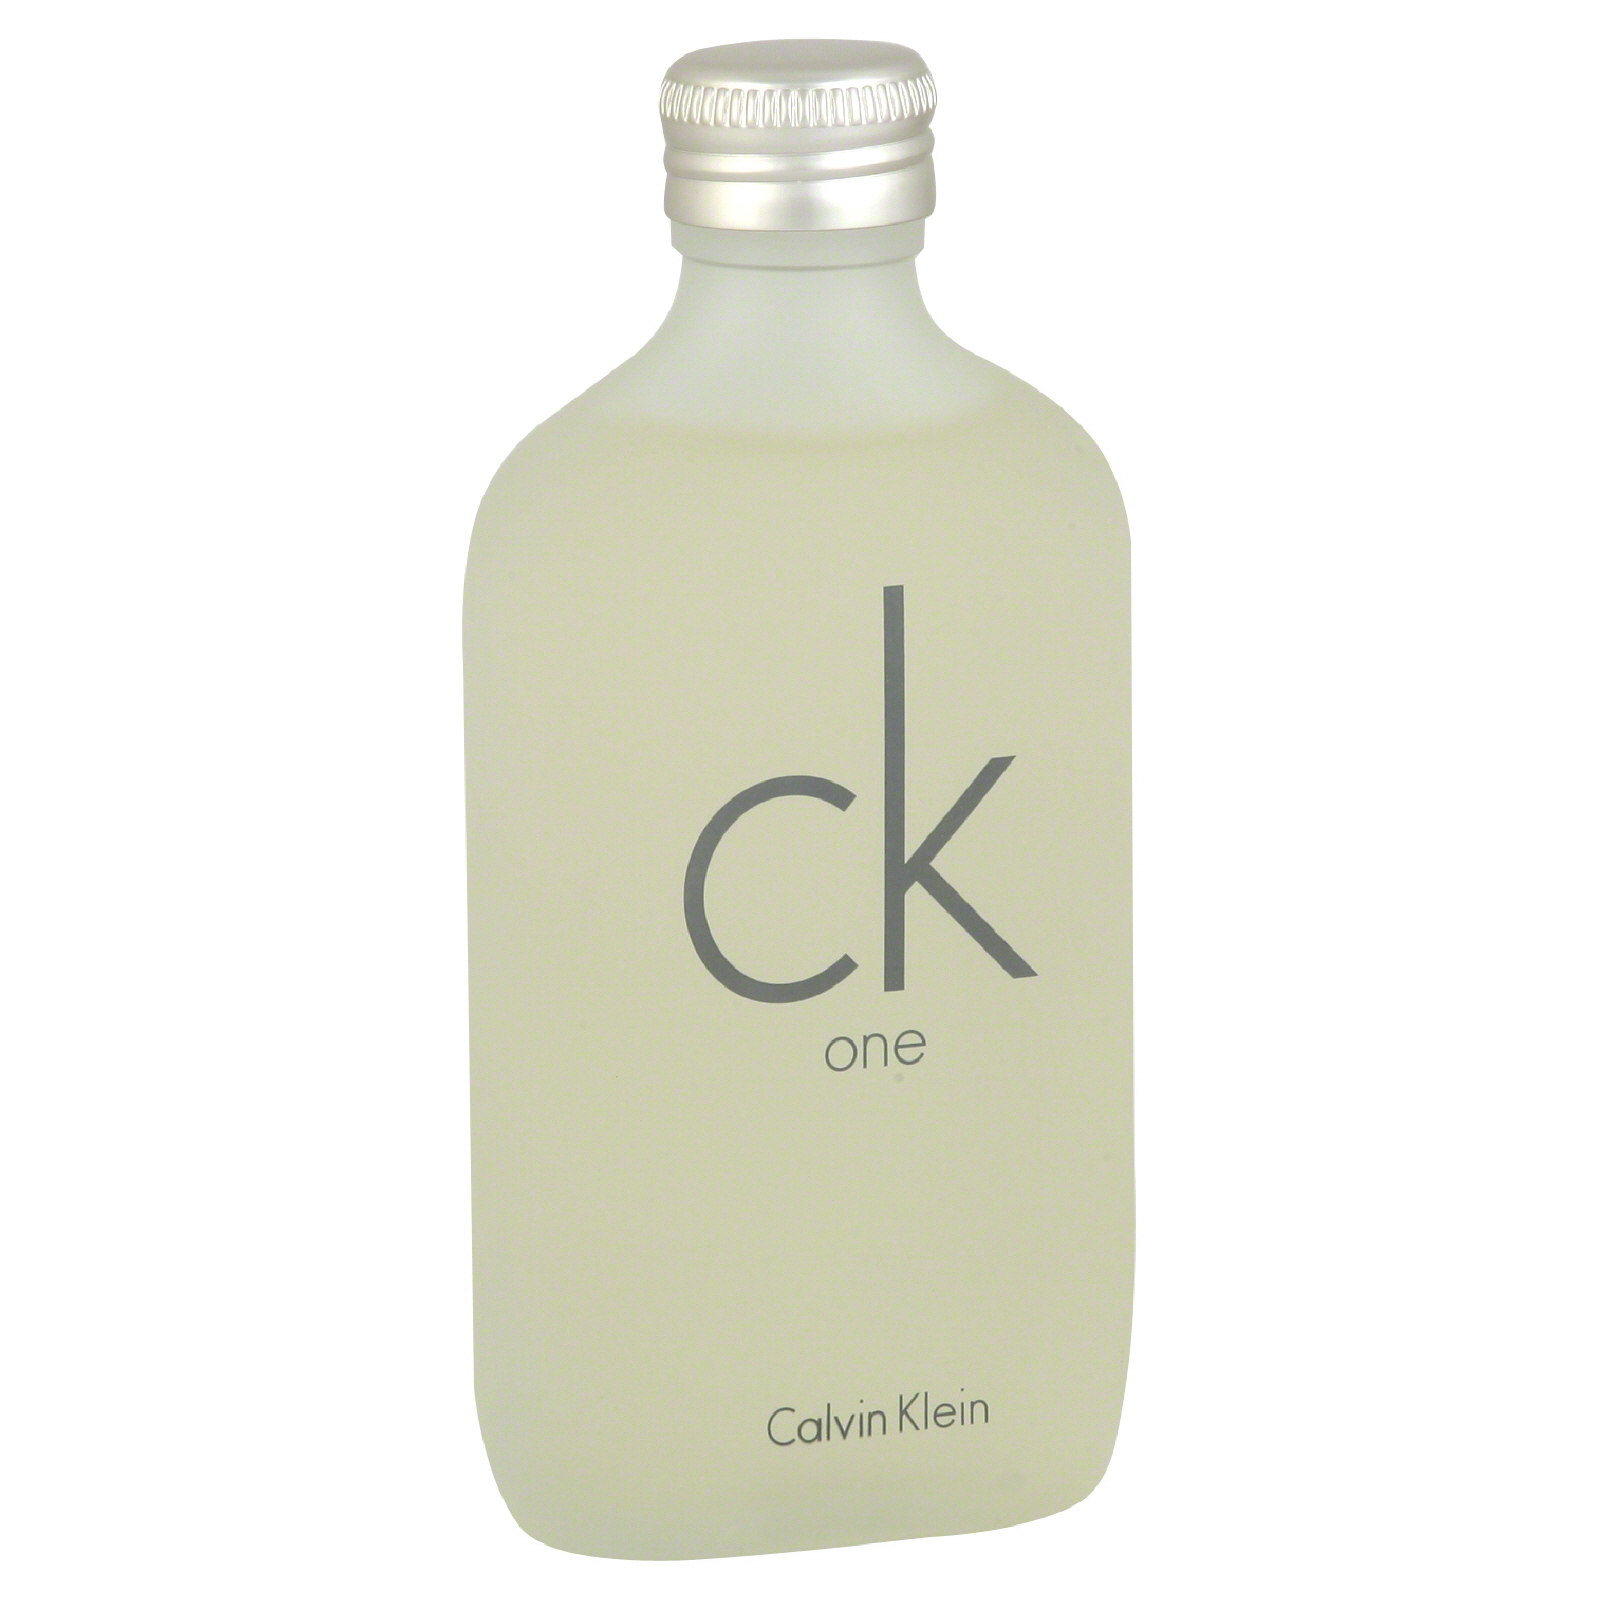 Calvin Klein cK One Eau de Toilette, 3.4 fl oz (100 ml)